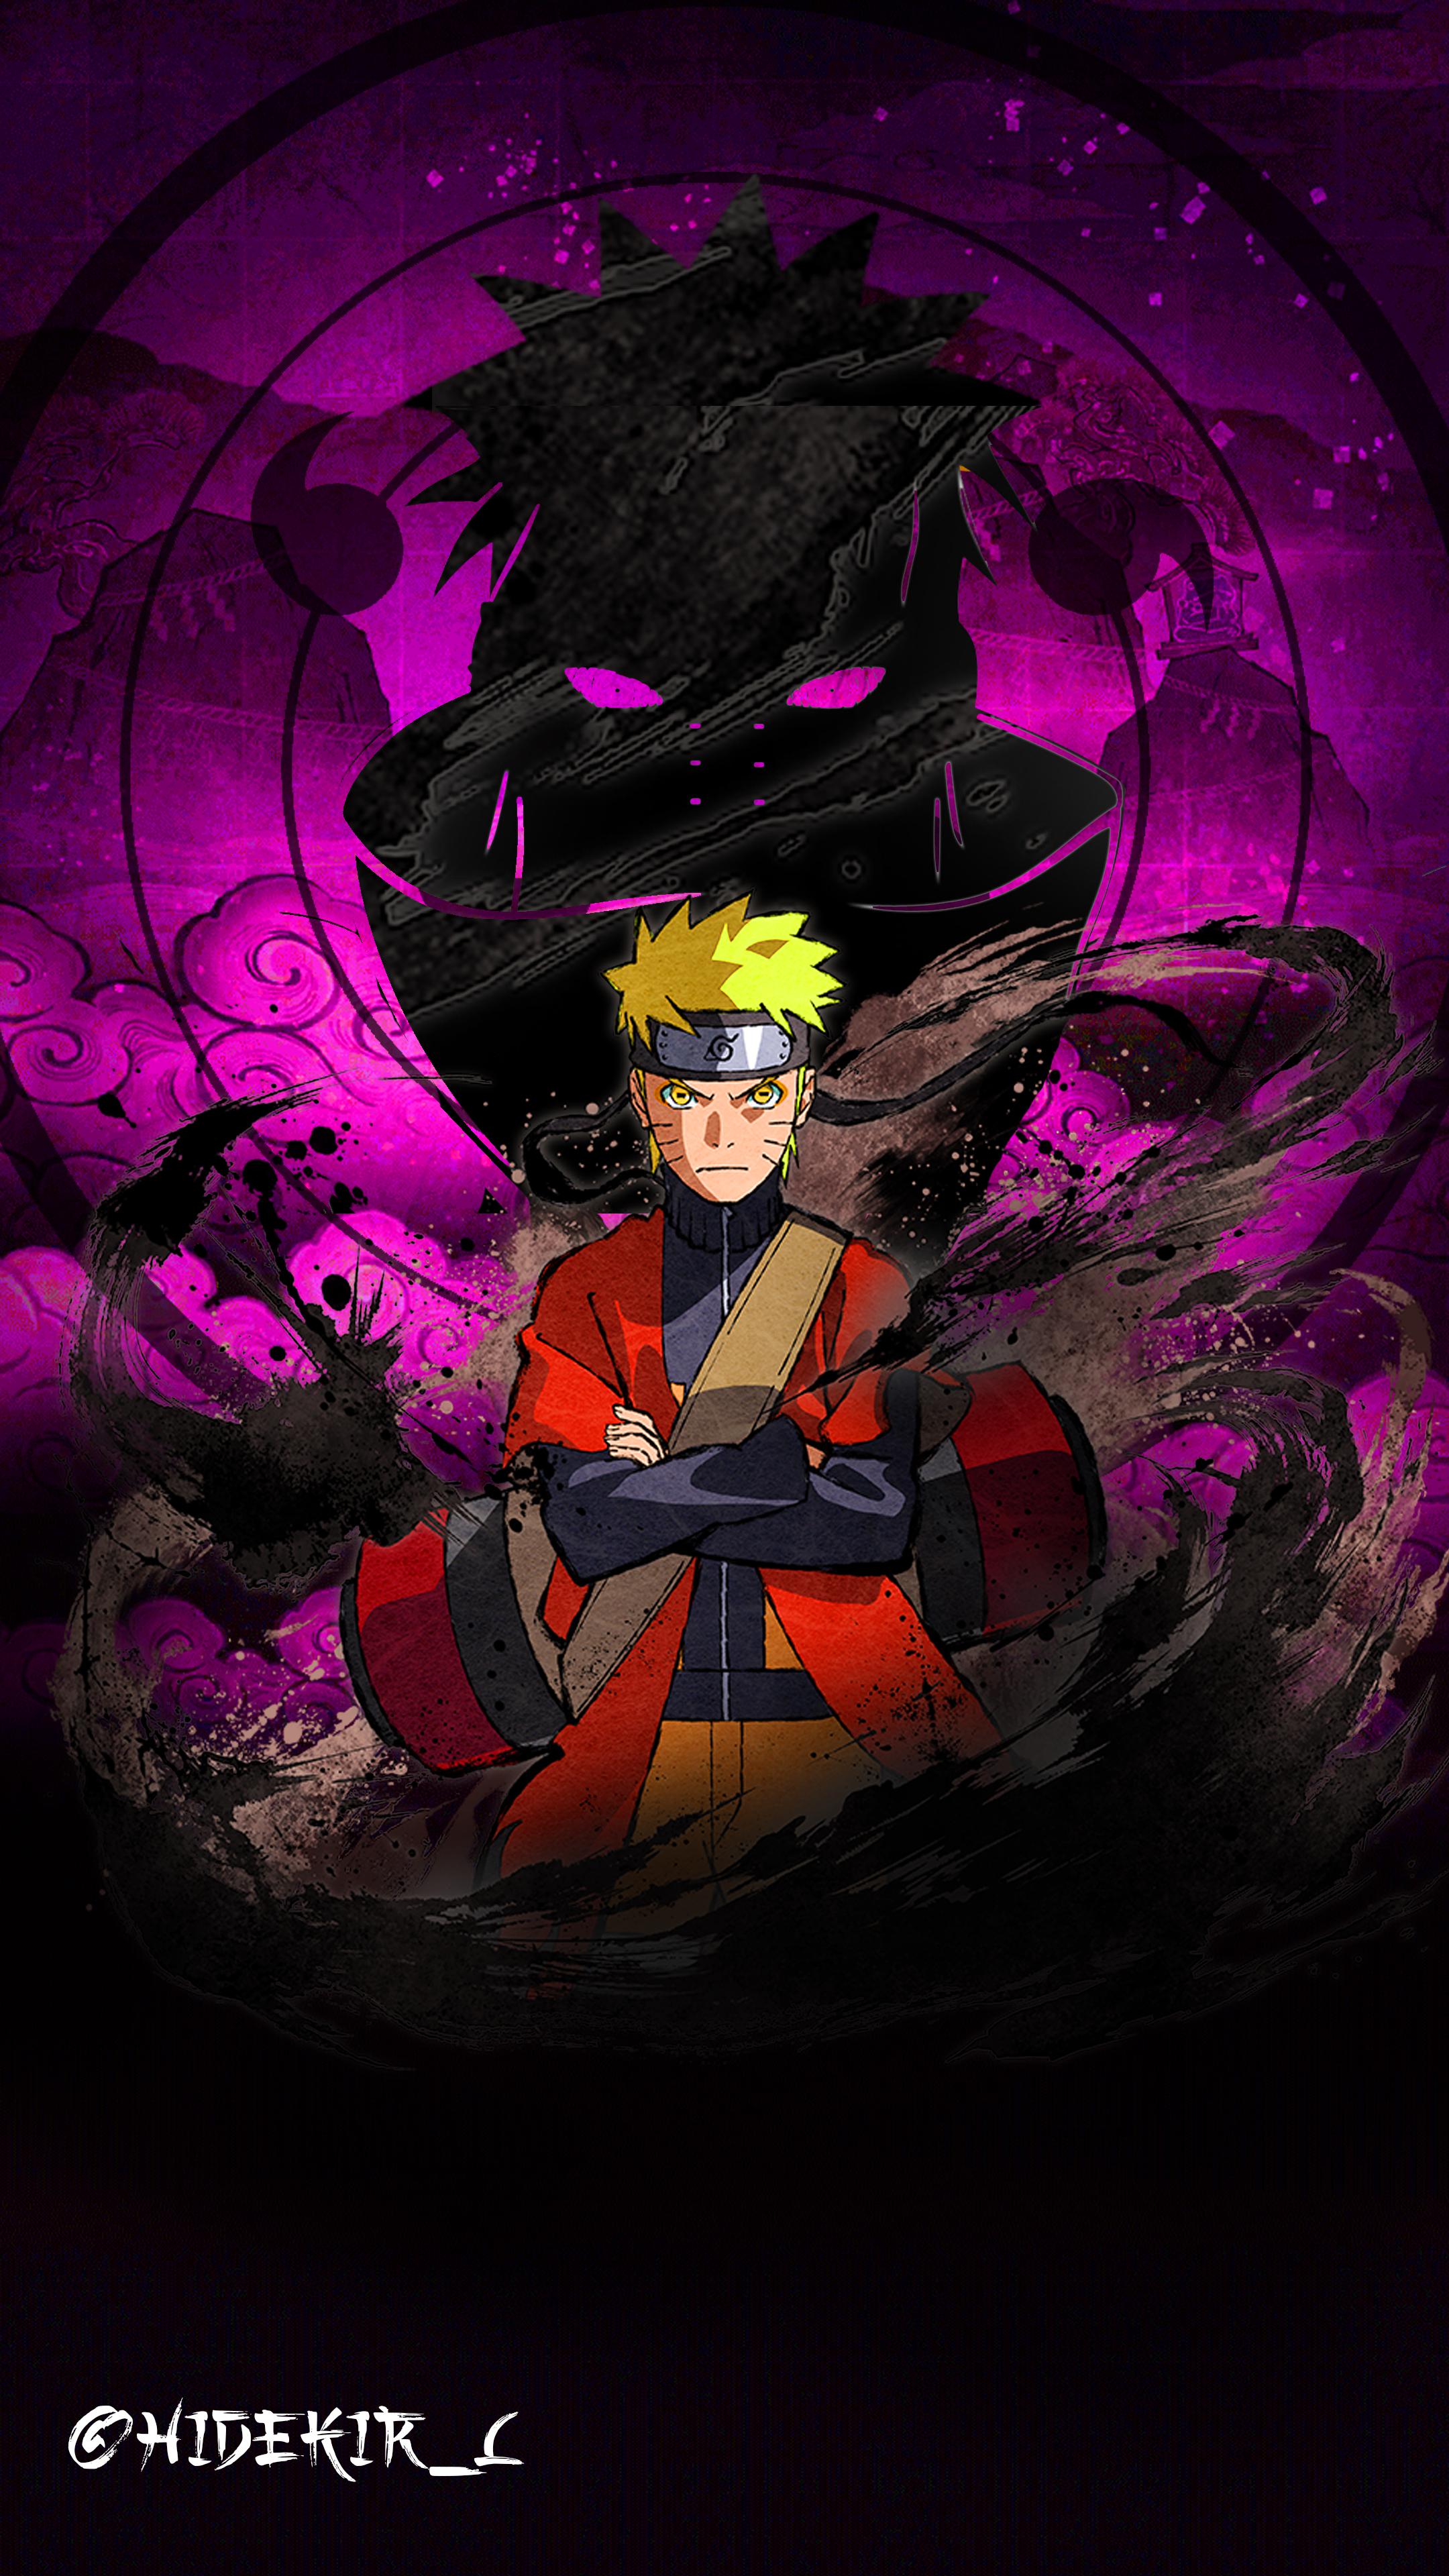 Gambar Wallpaper Naruto Keren Hd gambar ke 1